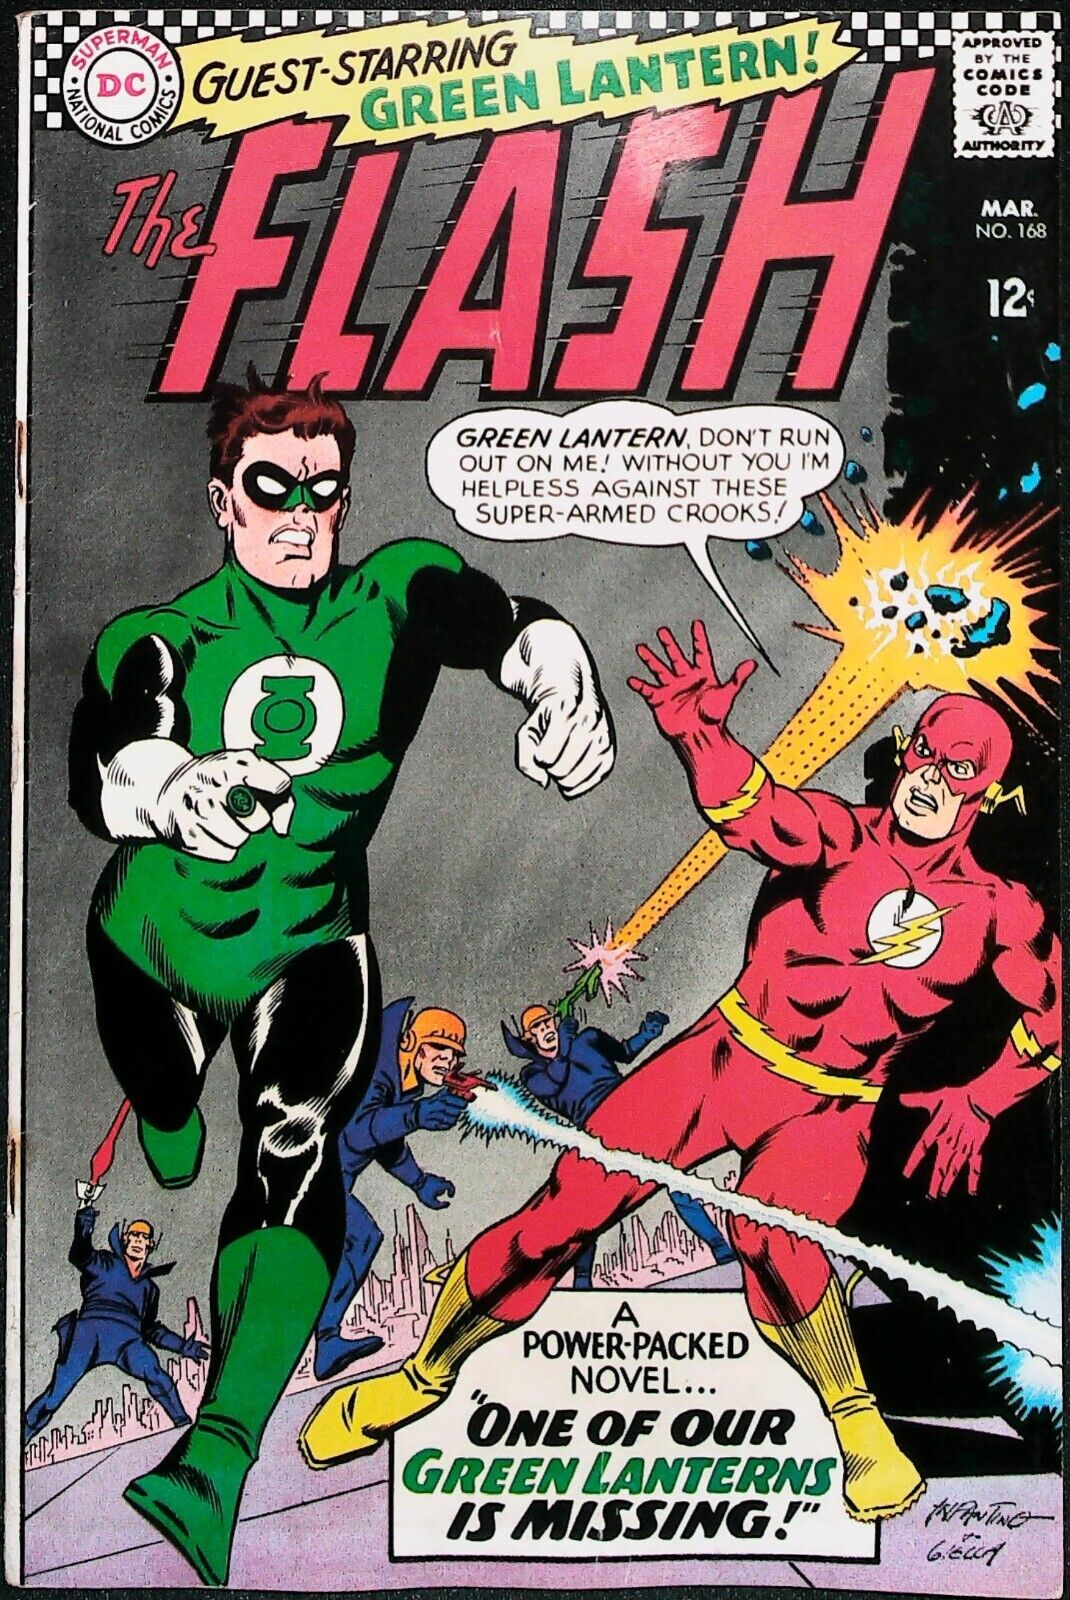 The Flash #168 Vol 1 (1967) *Green Lantern Appearance* - Mid Grade